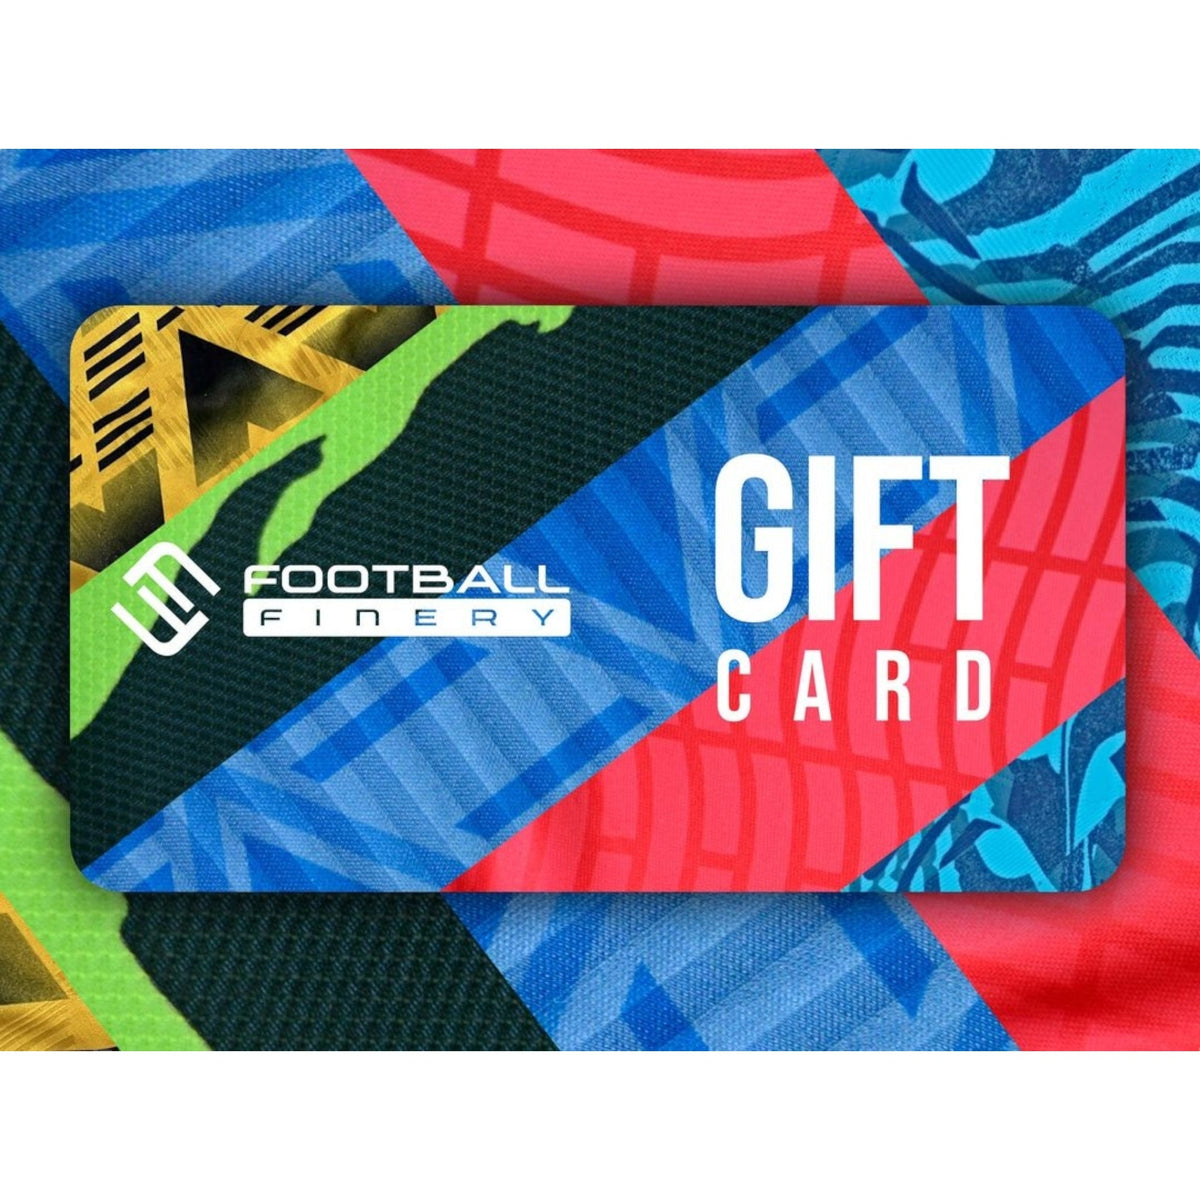 Football Finery E-Gift Card - Football Finery -